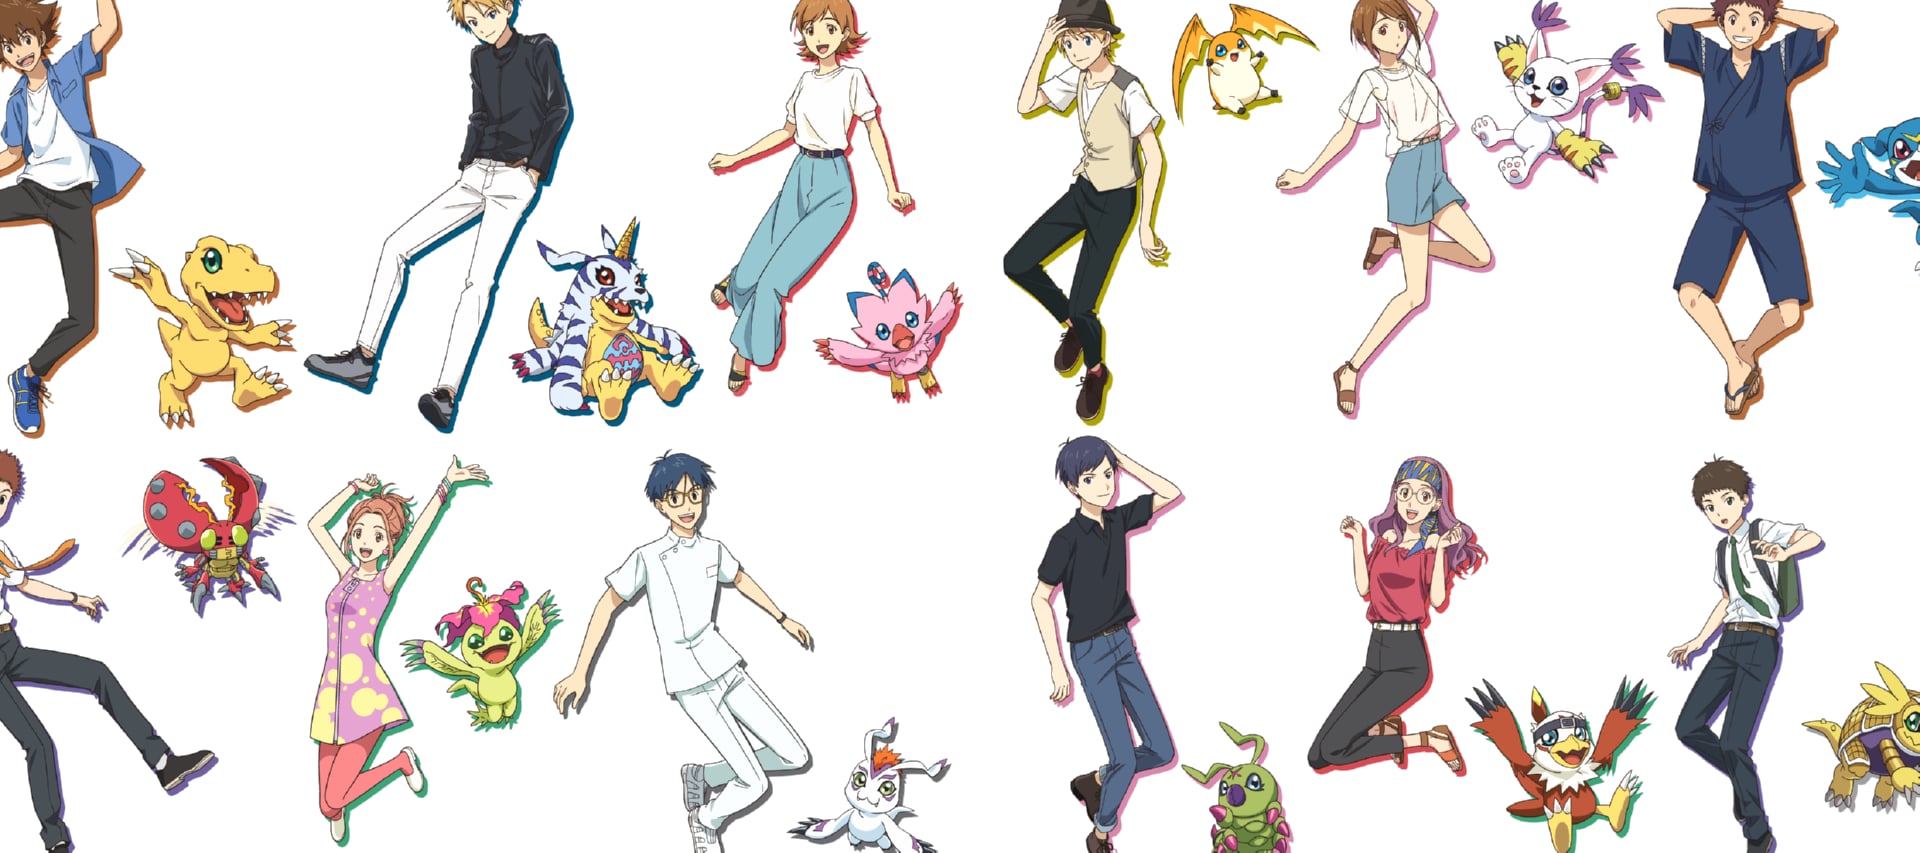 Digimon Adventure Last Evolution Kizuna at 640 x 1136 iPhone 5 size wallpapers HD quality